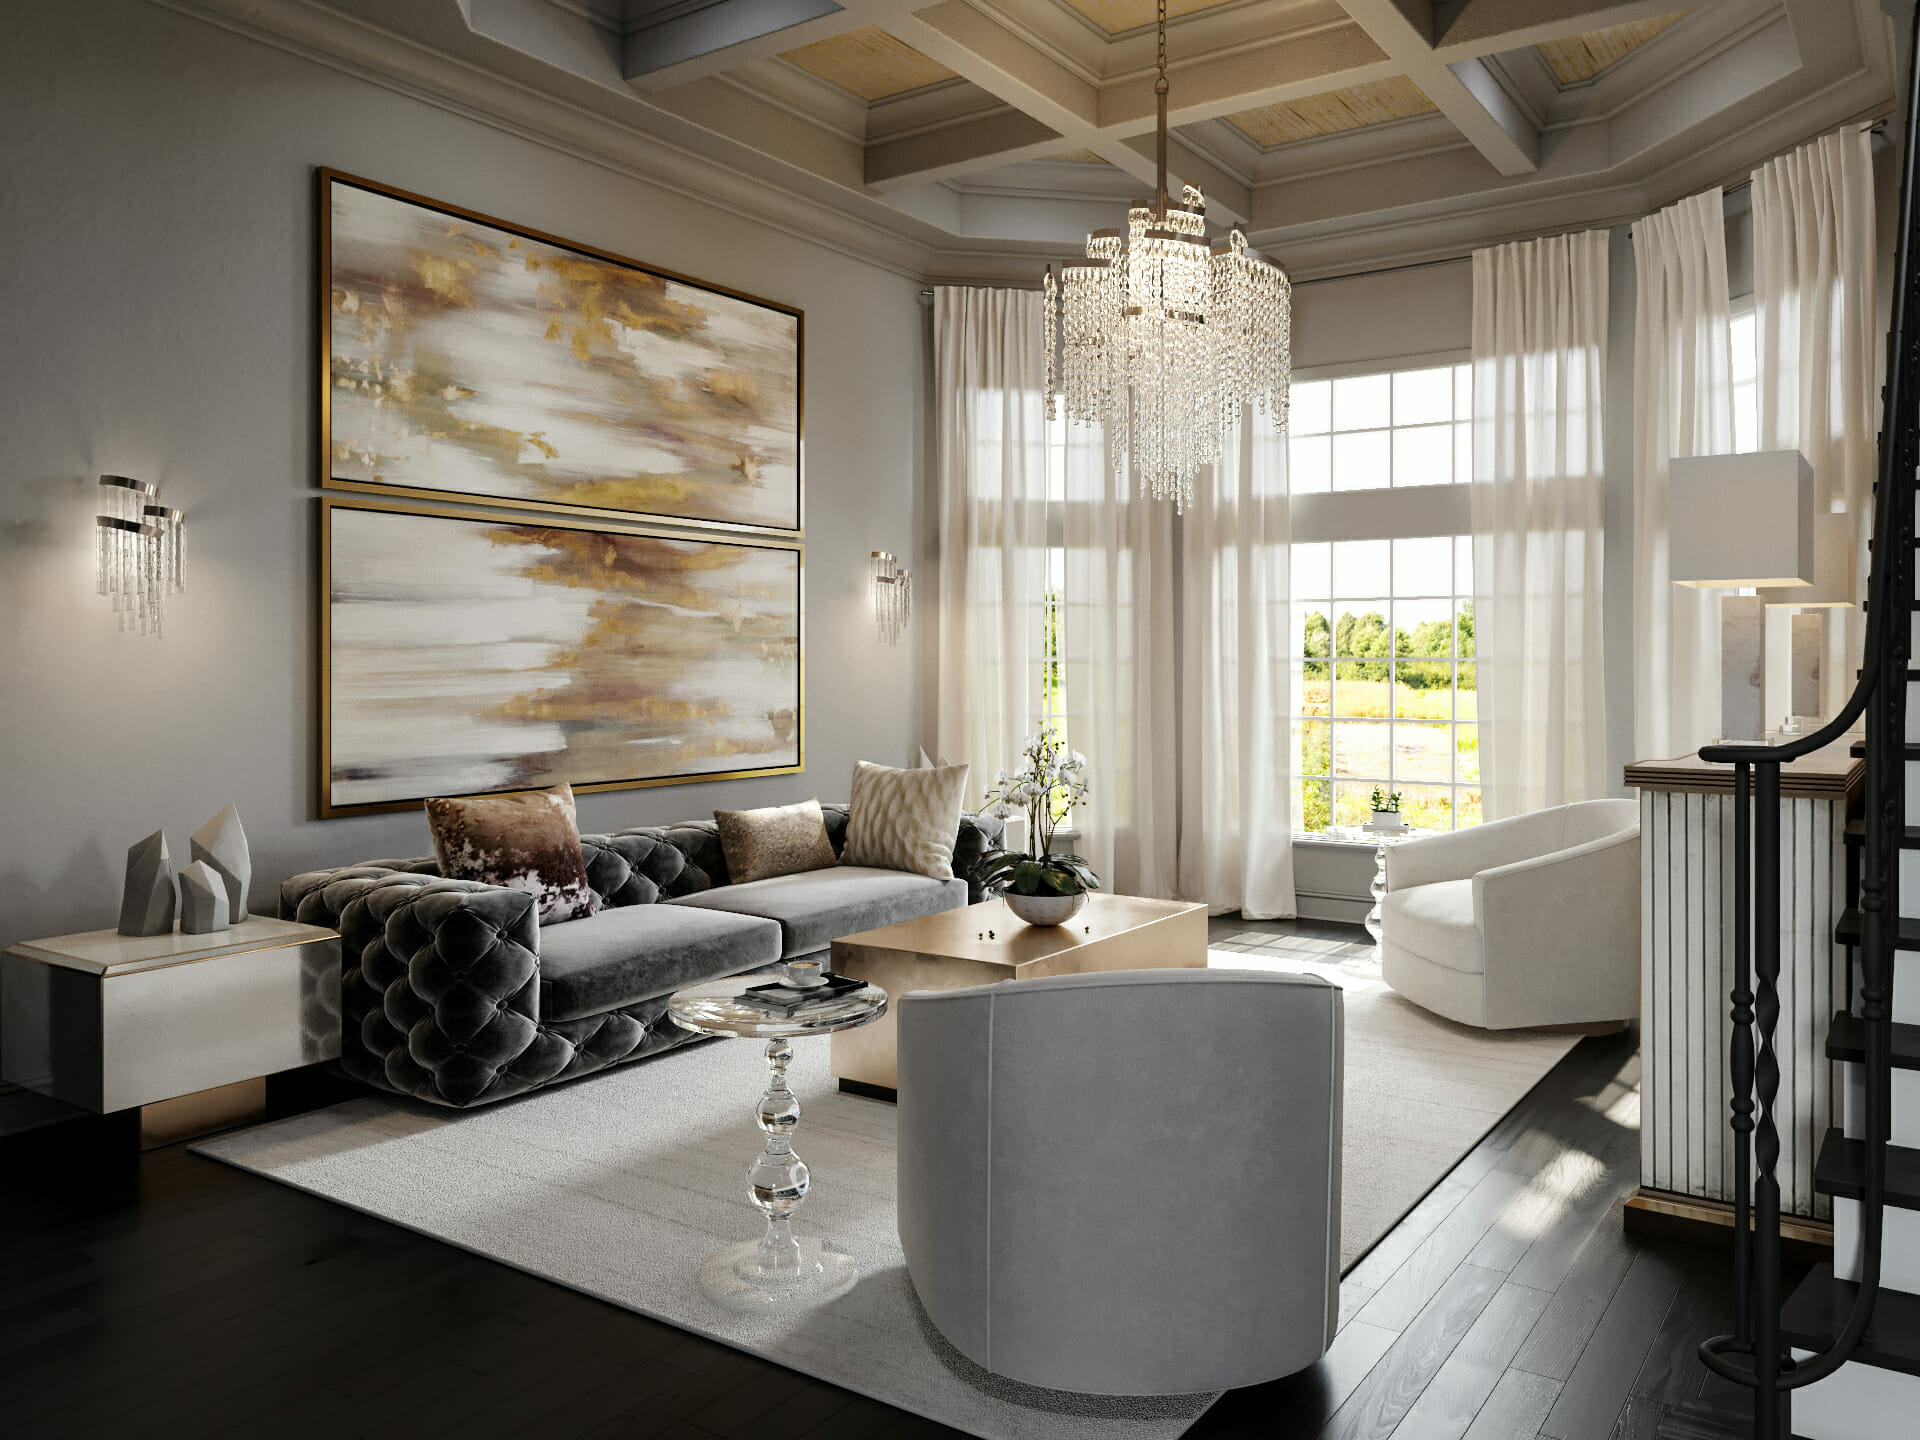 Luxury room interior by Decorilla designer Tera S